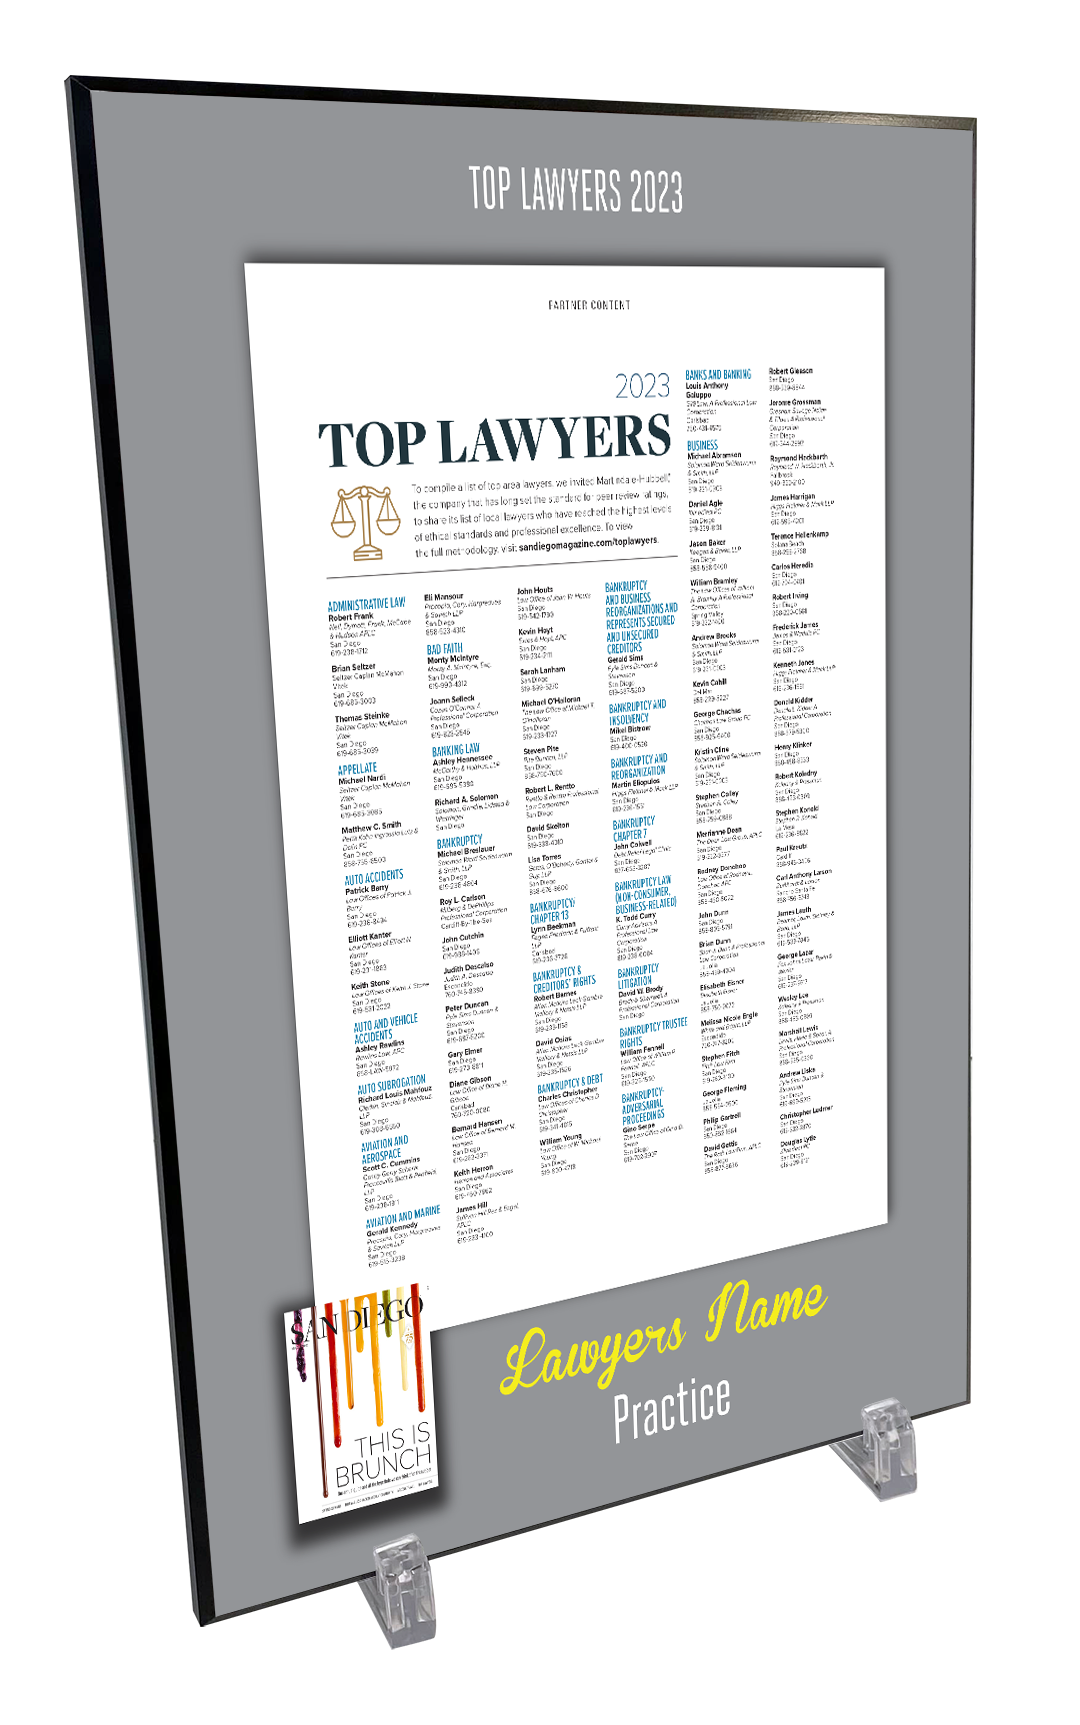 San Diego Magazine "Top Lawyers" Profile Award Plaques